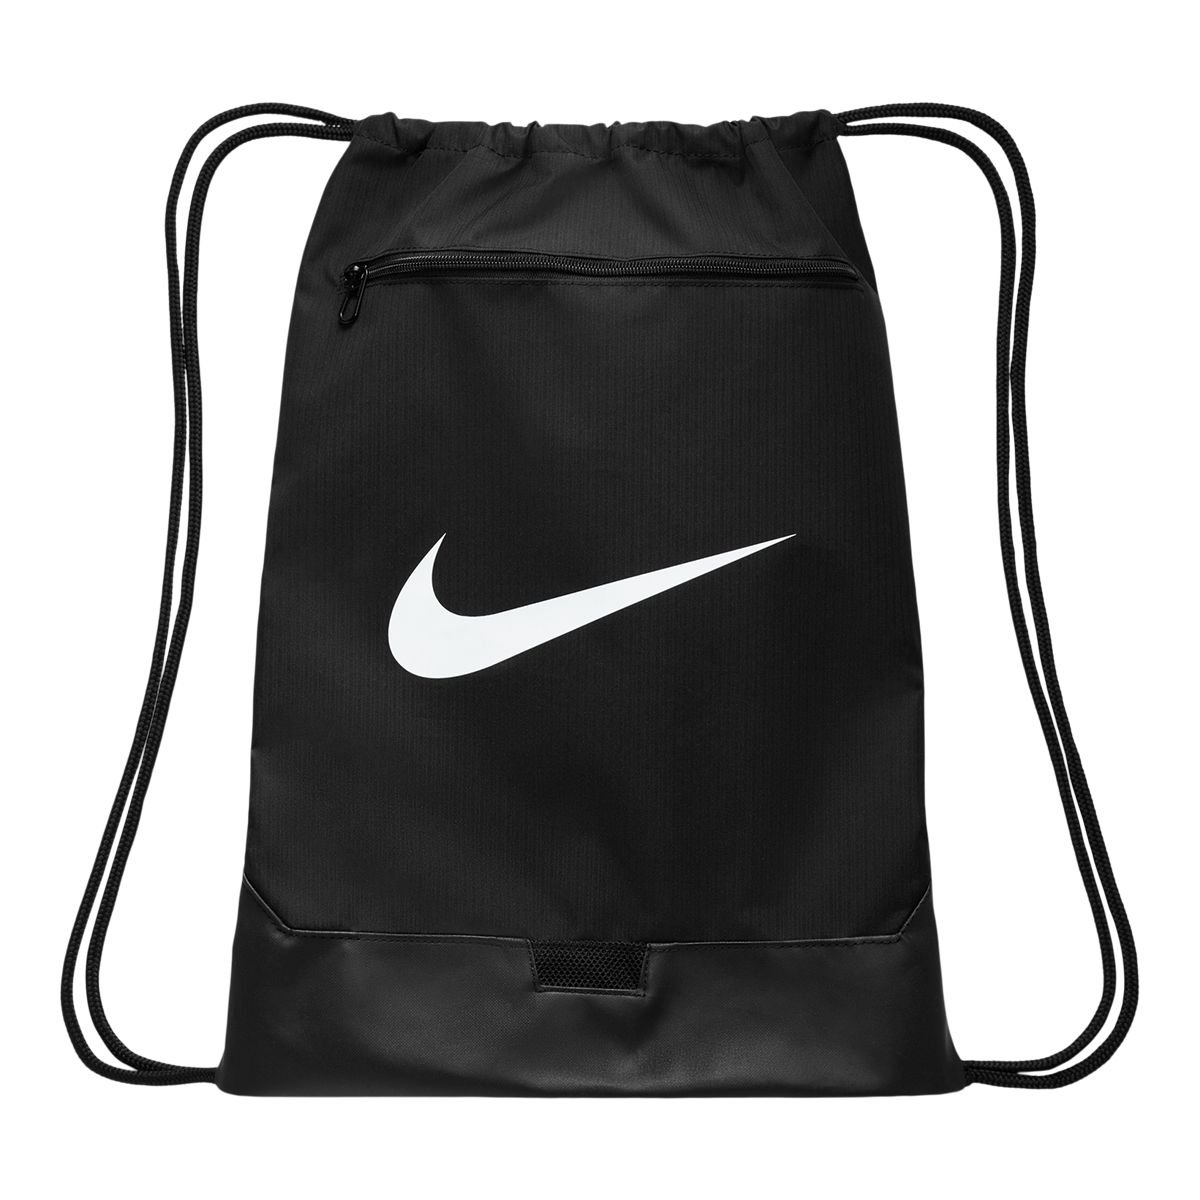 Nike Brasilia All Over Print Gymsack Sackpack/Drawstring Bag, Lightweight